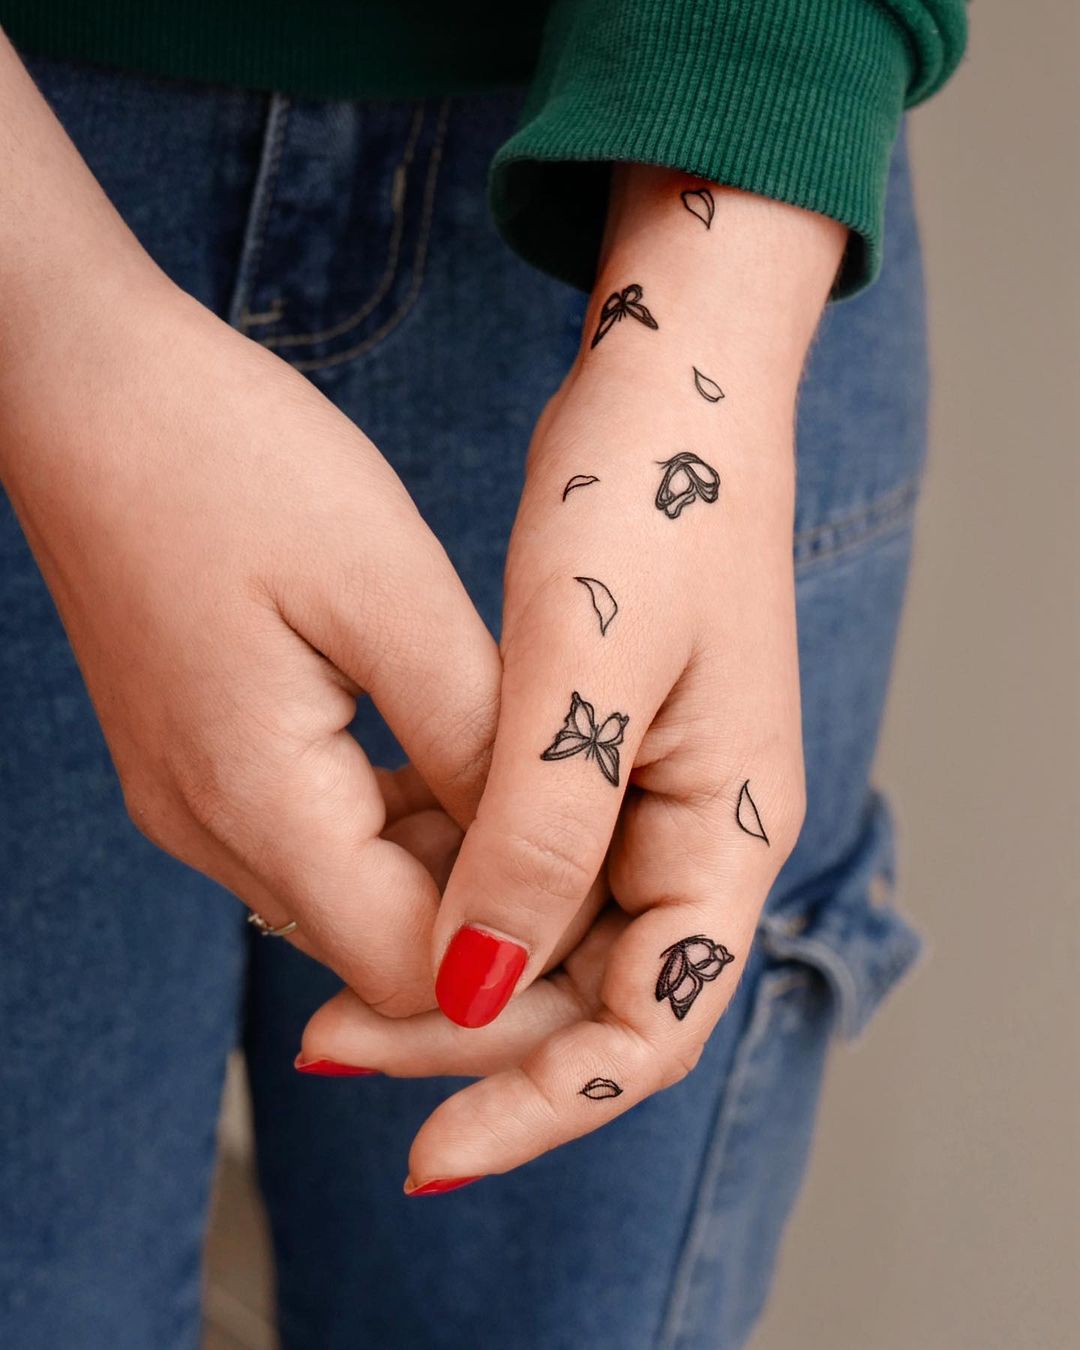 Small Tattoo Designs - Best Small Tattoo Design Ideas for Girls.